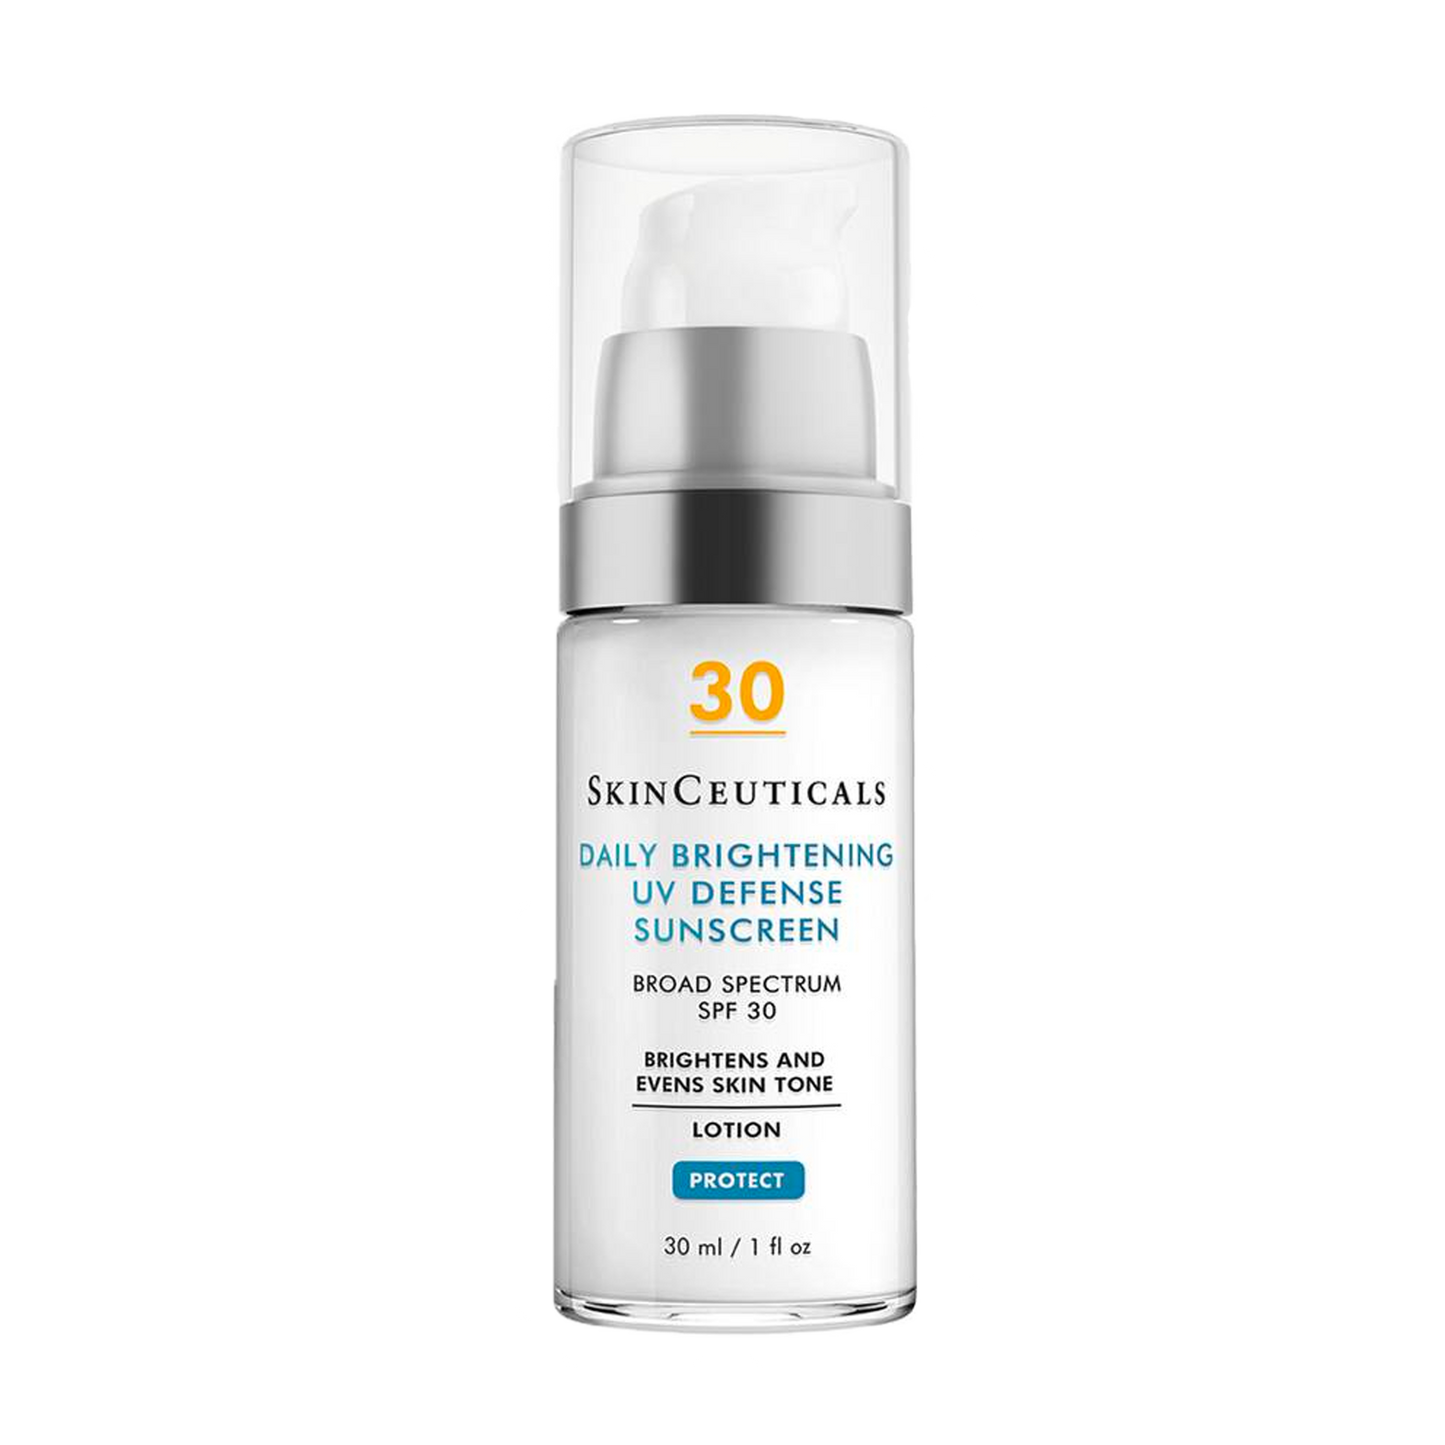 Skin Ceuticals Daily Brightening UV Defense Sunscreen SPF 30